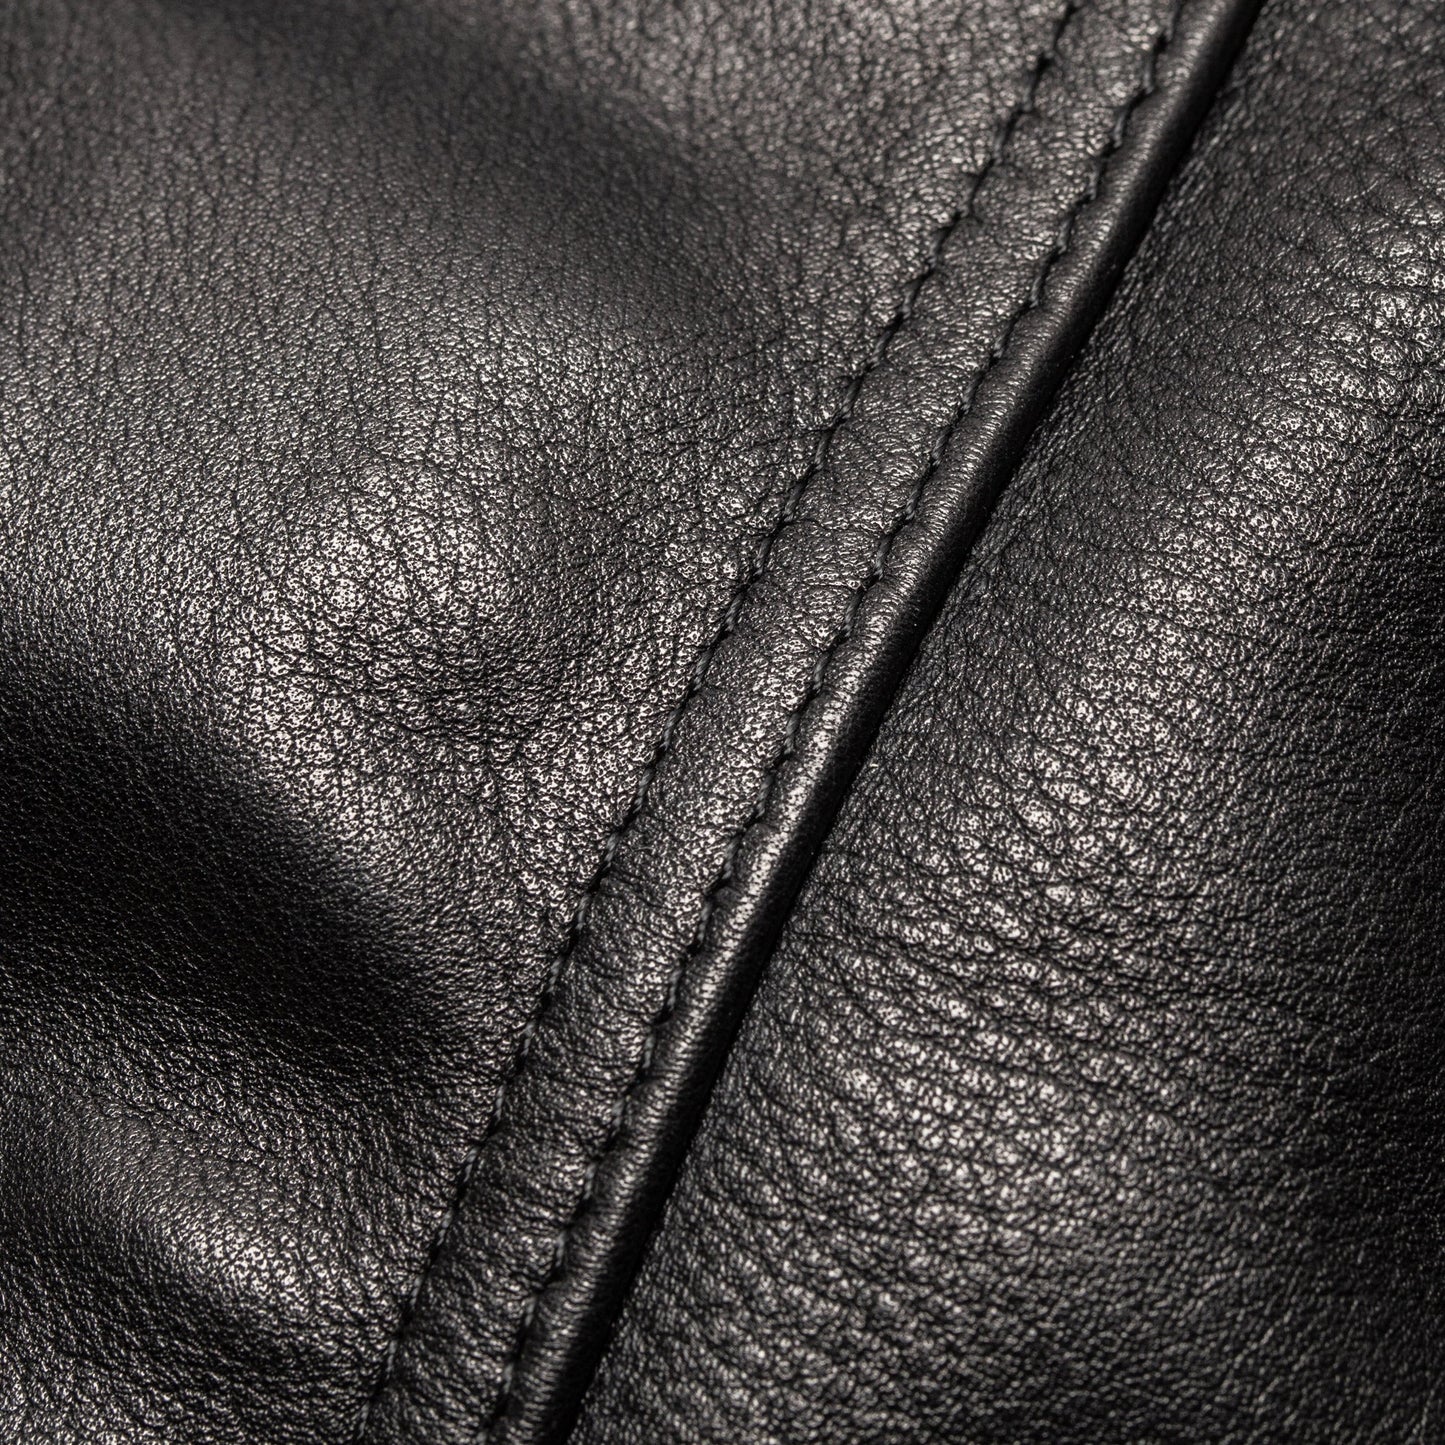 4 Pocket Leather Jacket - Black - Fogy Garage